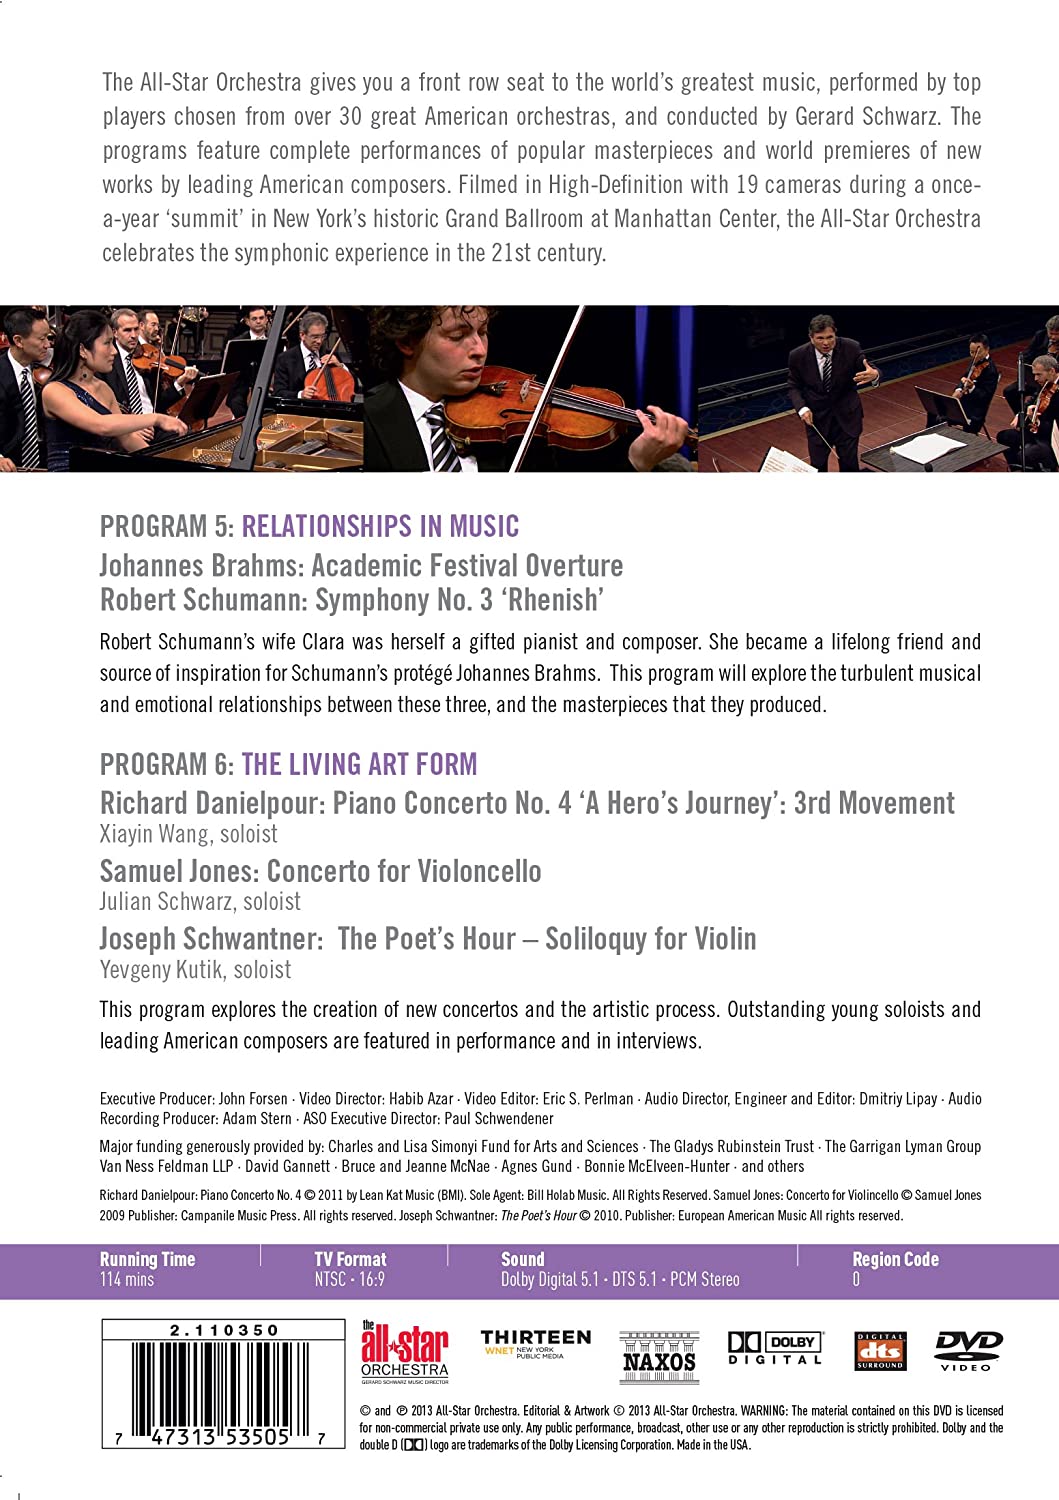 The All-Star Orchestra Programs 5 & 6: Brahms, Schumann, Danielpour - slide-1